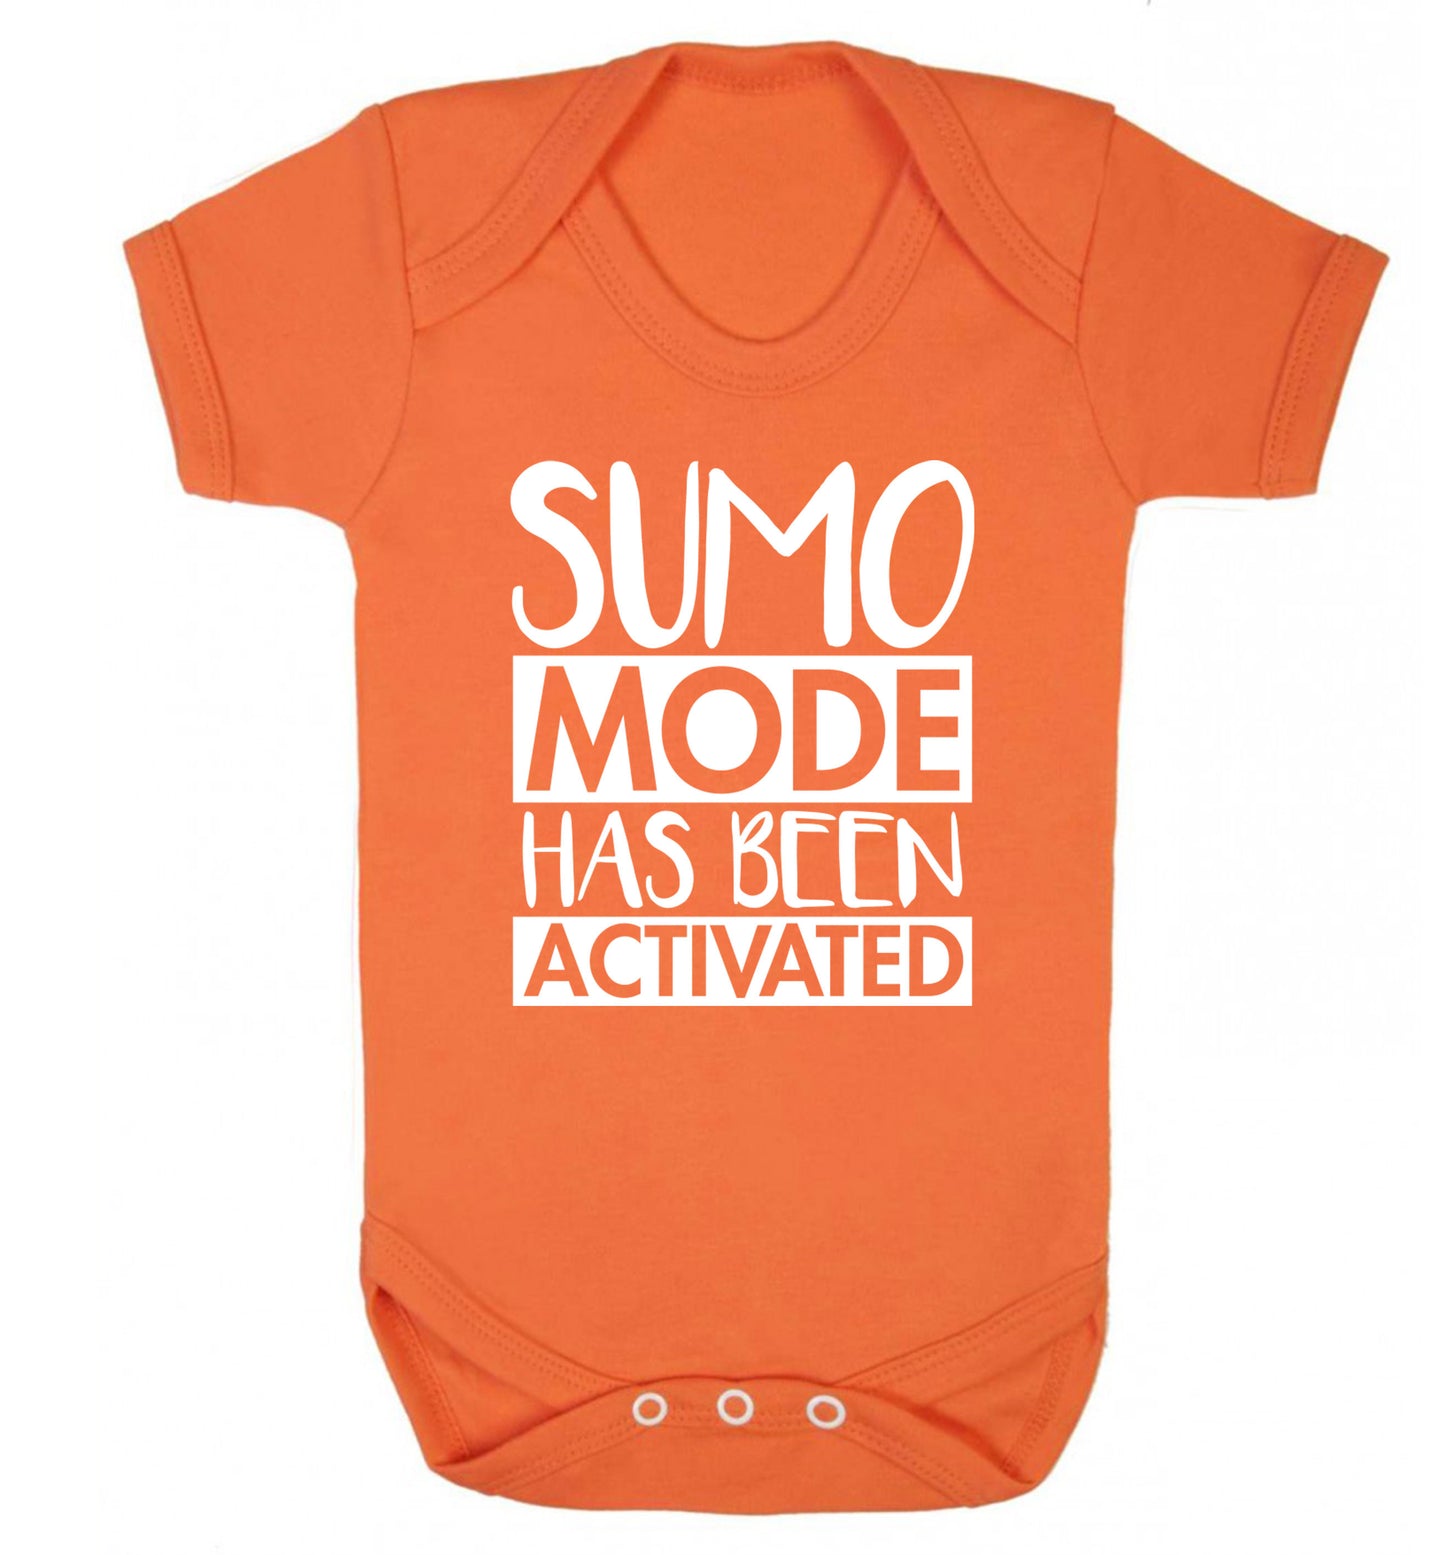 Sumo mode activated Baby Vest orange 18-24 months